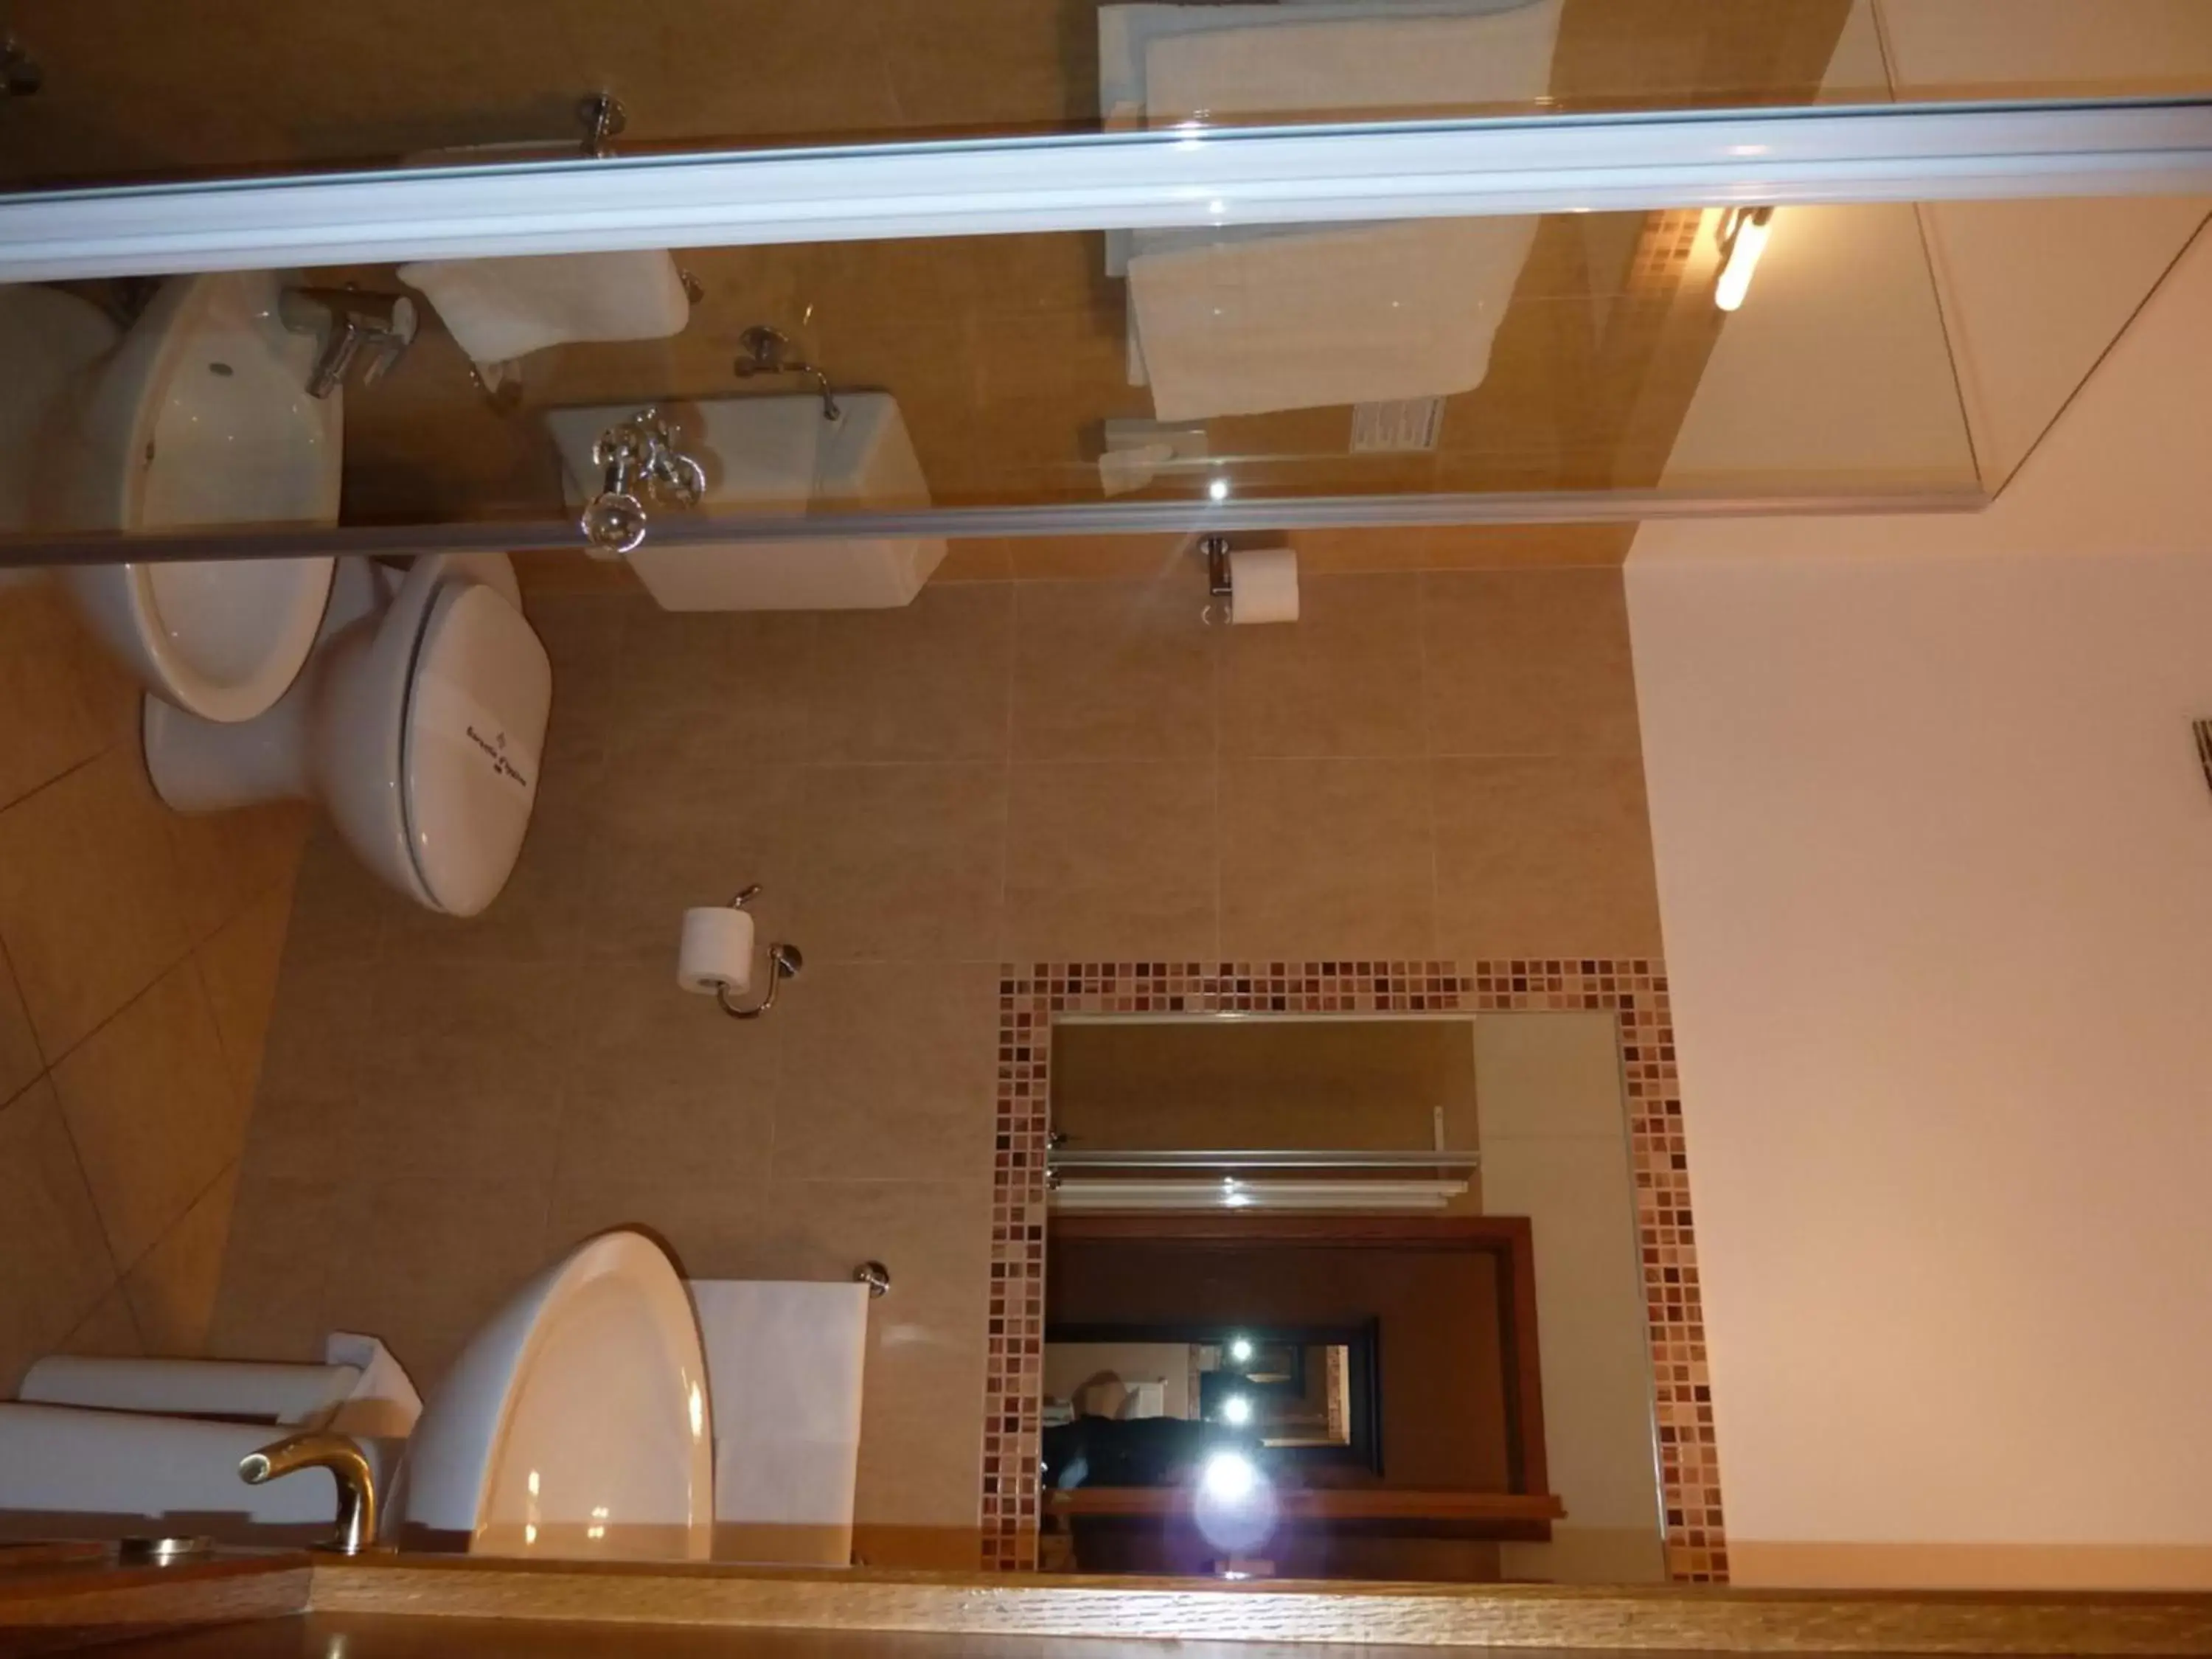 Bathroom in Albergo Reggio